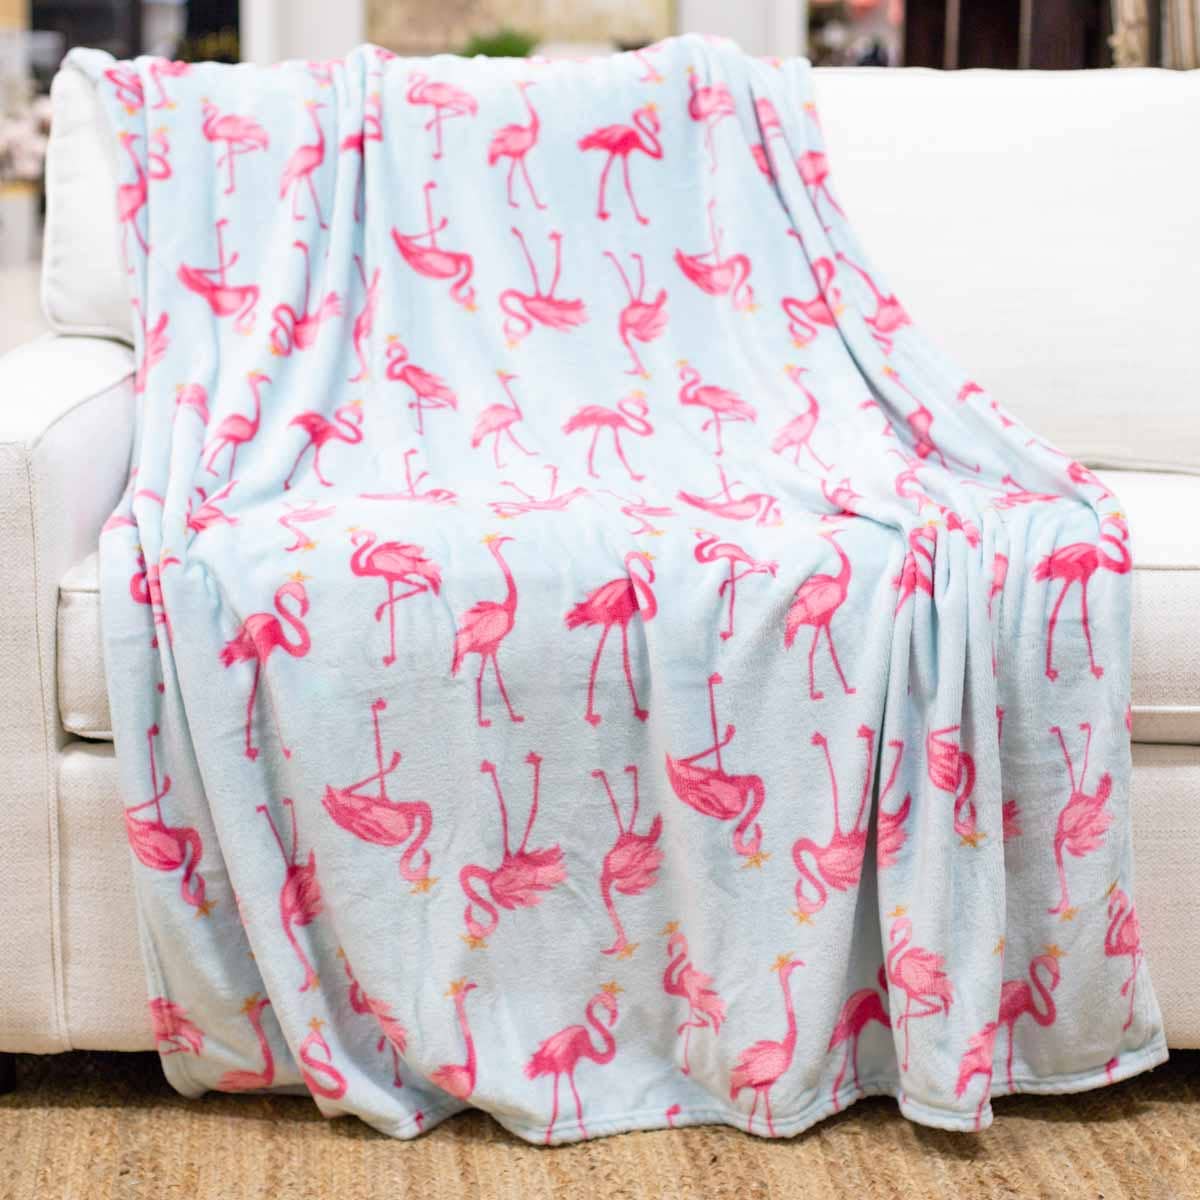 Flamingle Throw Blanket   50x60